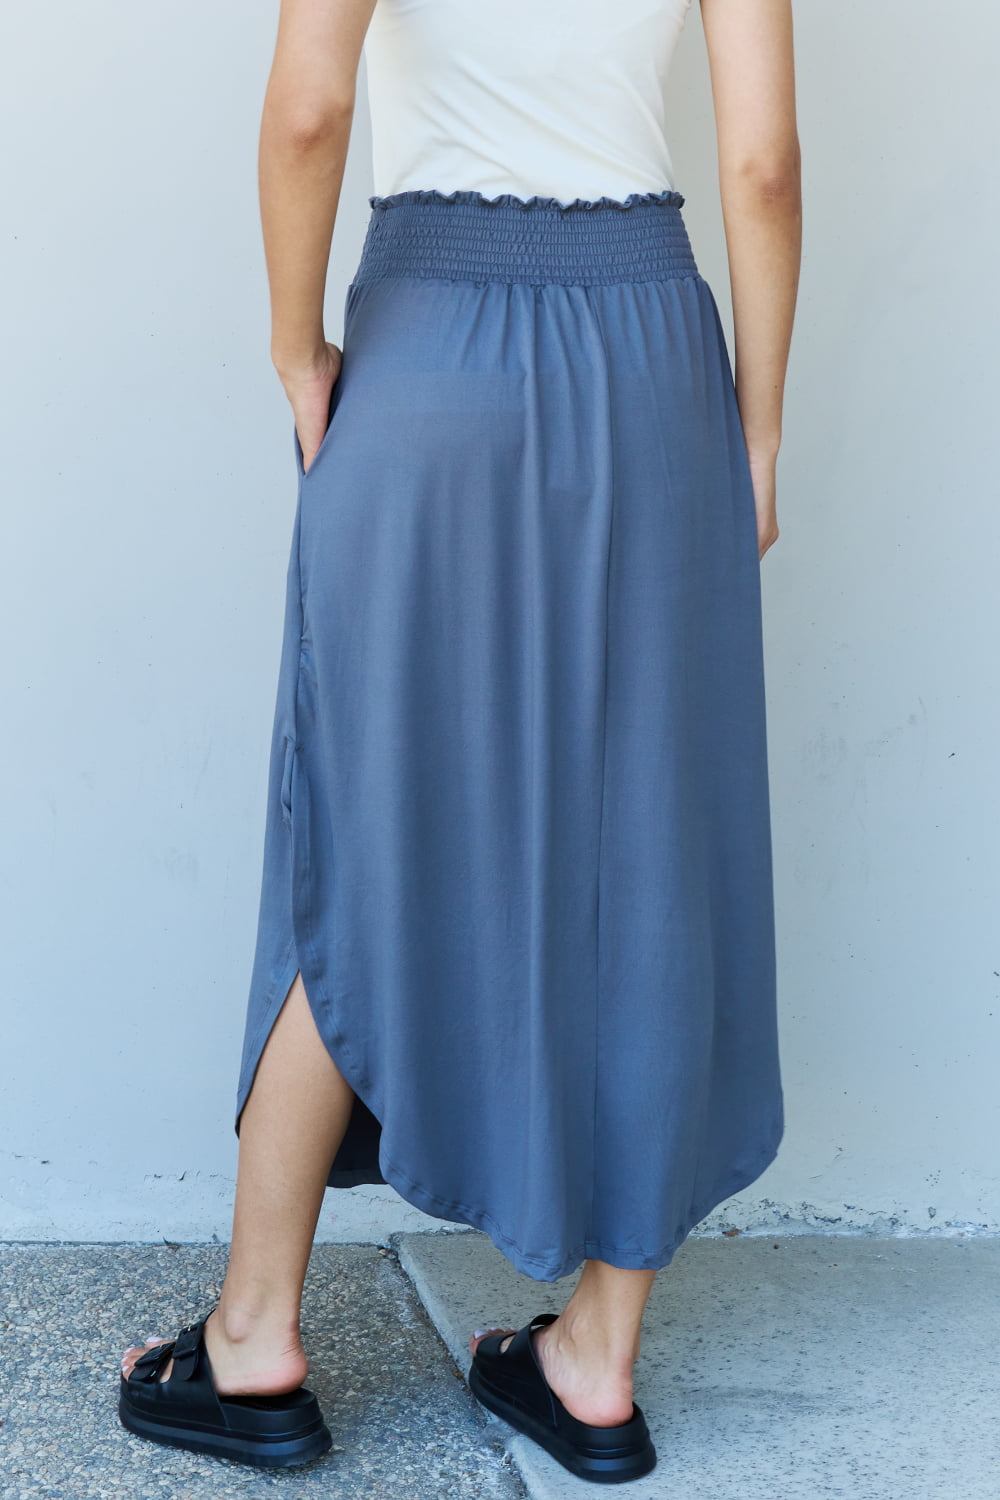 Doublju Comfort Princess Full Size High Waist Scoop Hem Maxi Skirt in Dusty Blue - nailedmoms